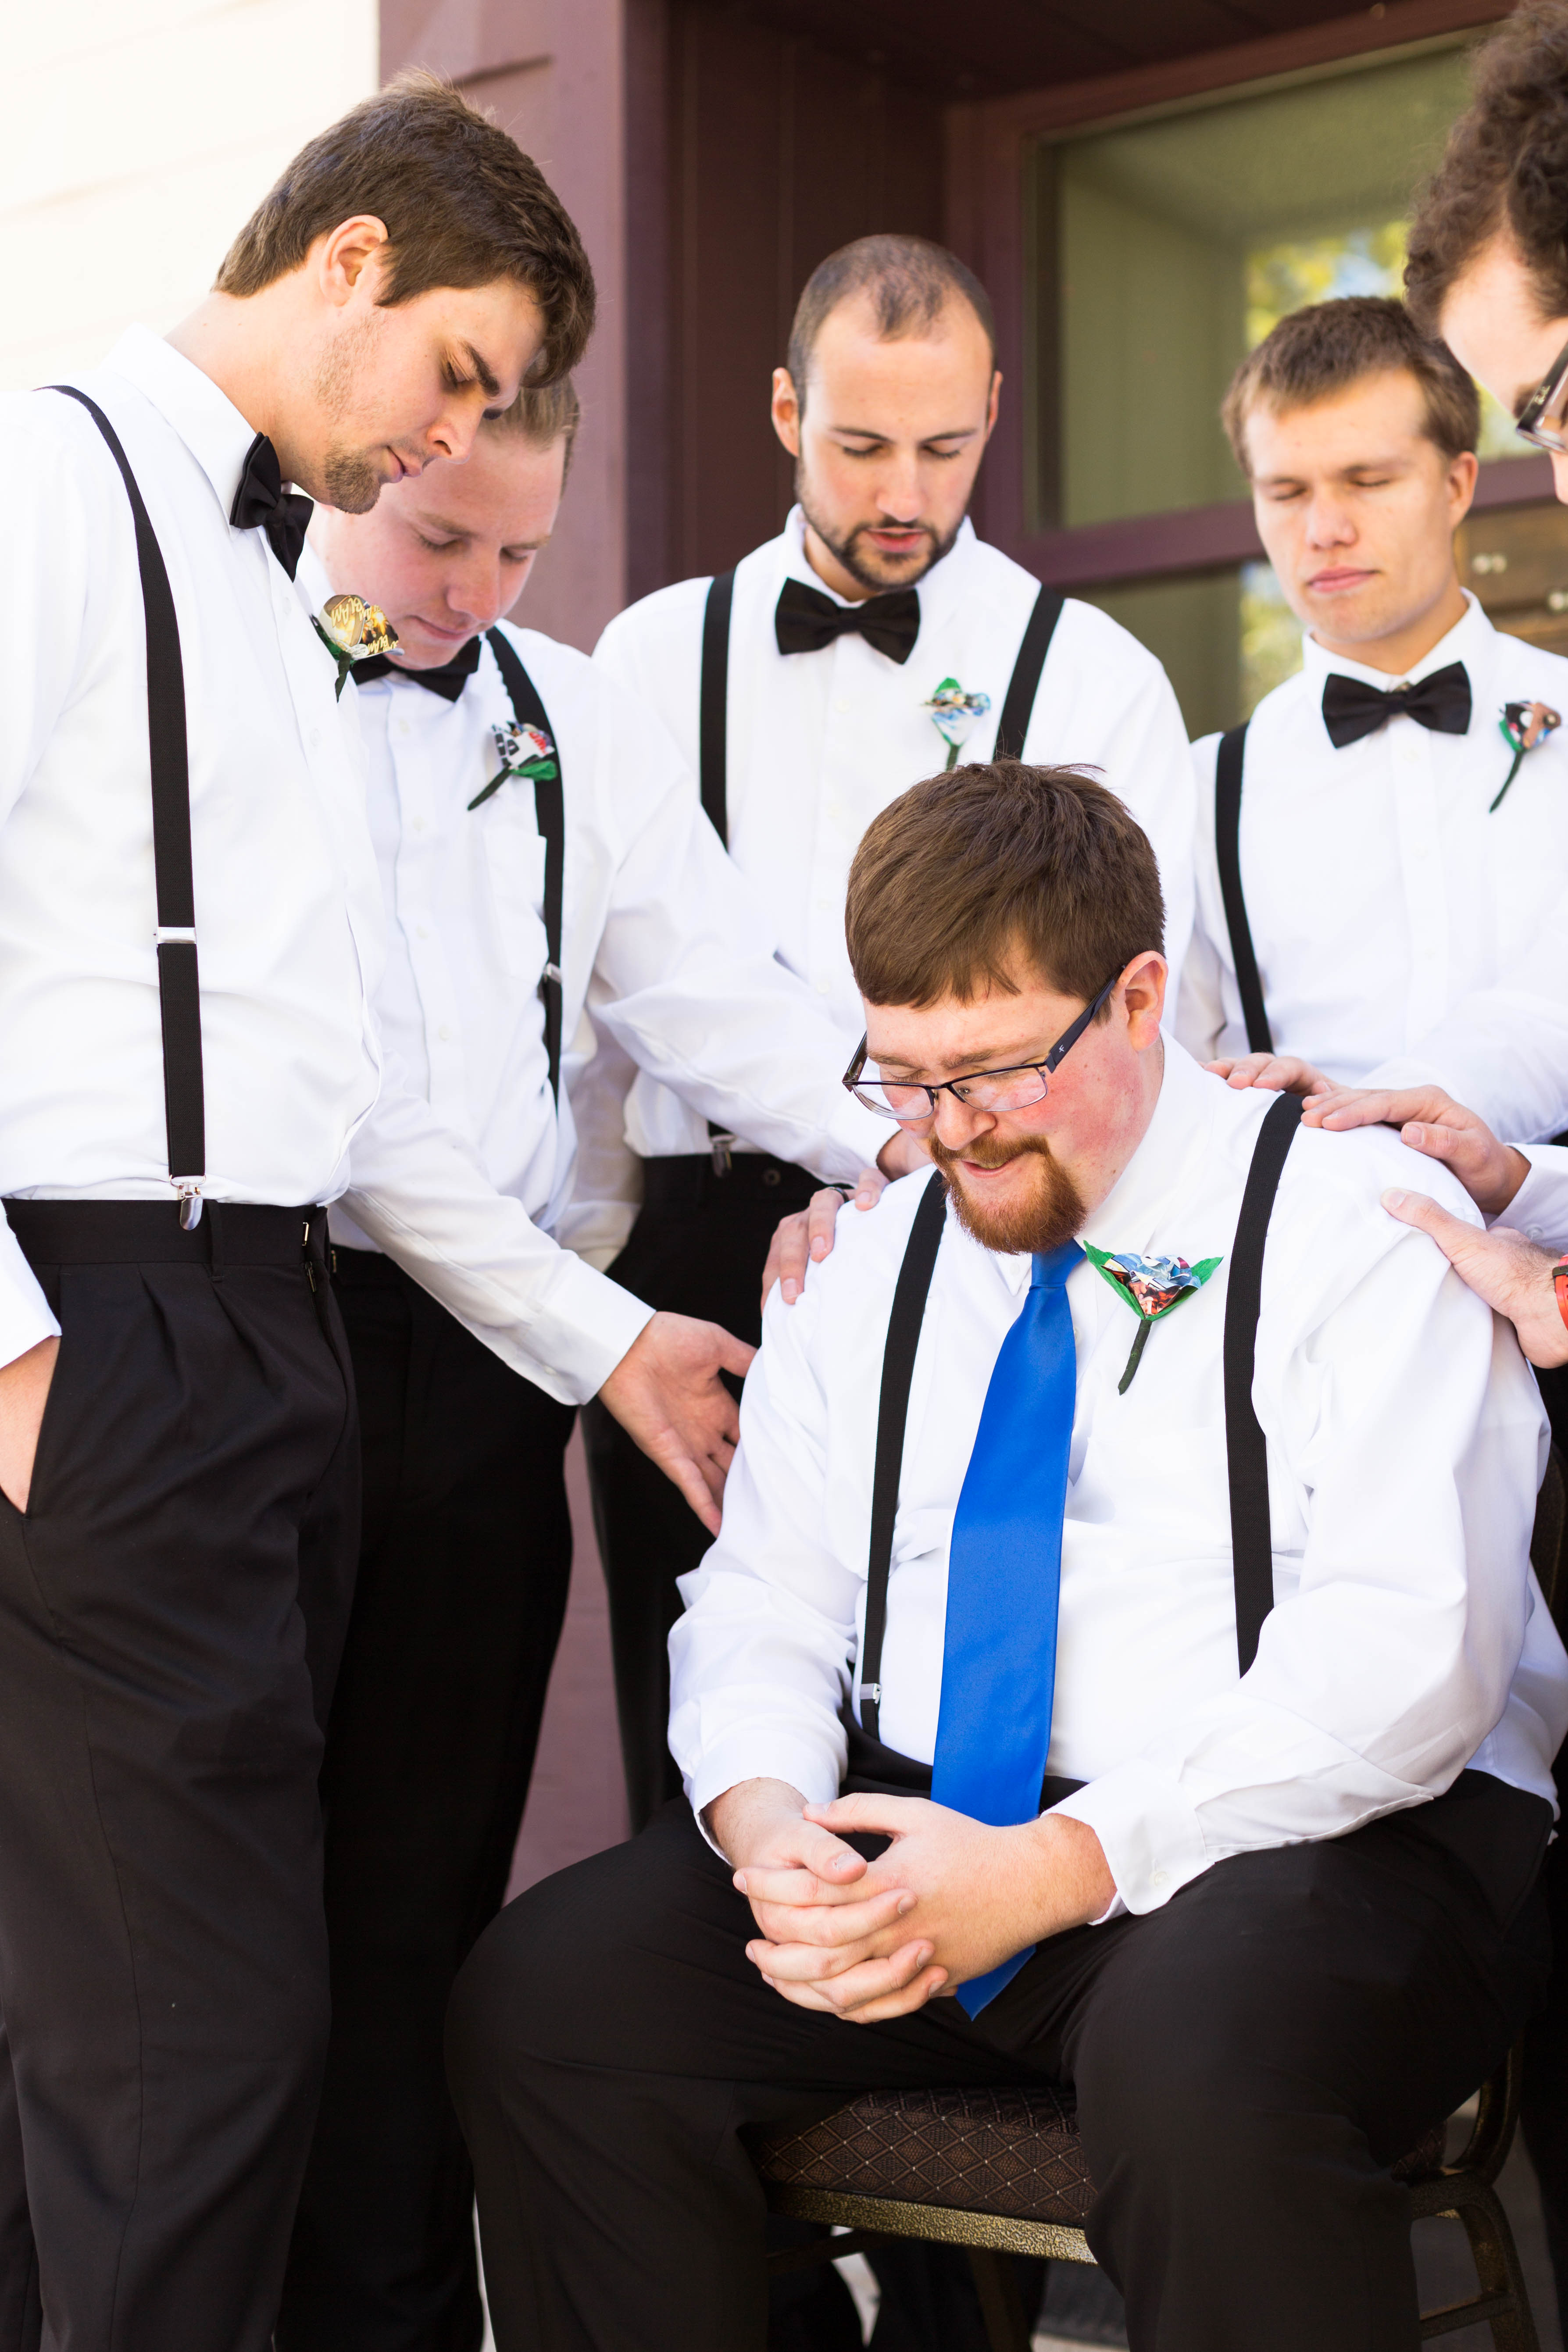 groomsmen surround groom and pray for him